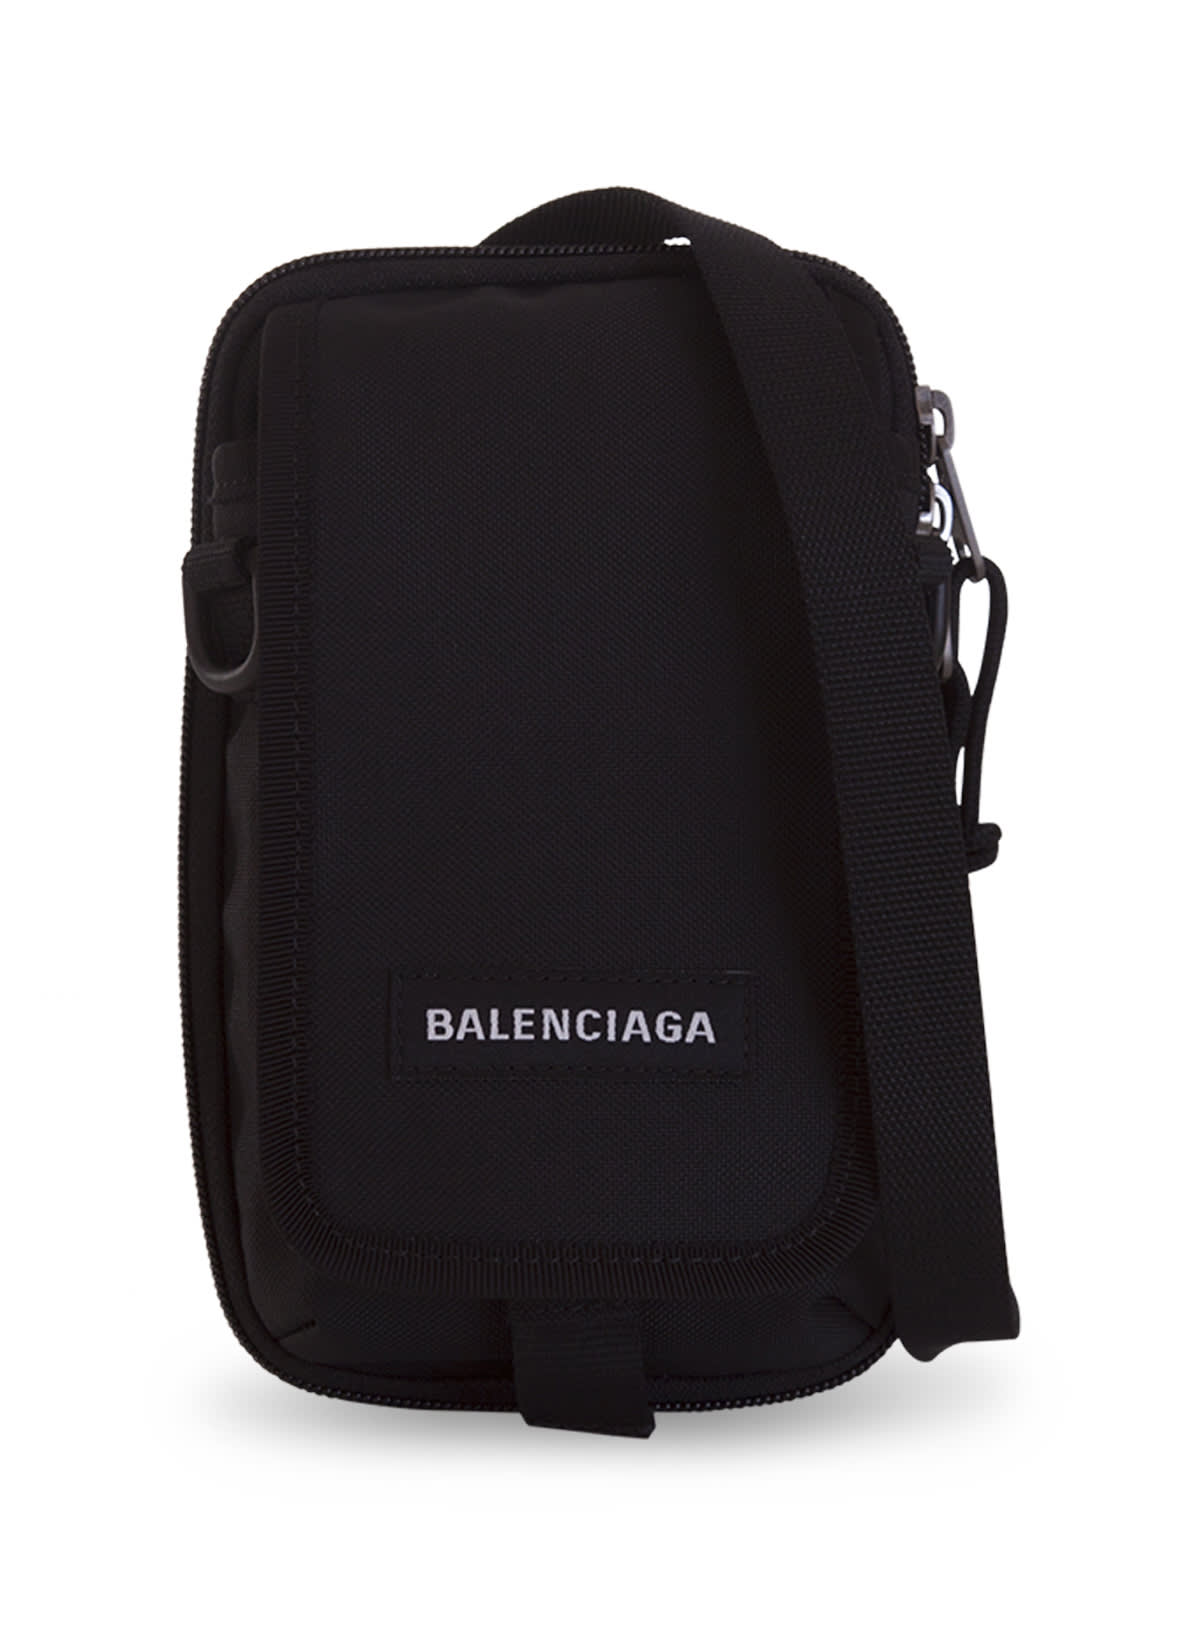 BALENCIAGA EXPLORER SHOULDER BAG,593329 2HFBX1000